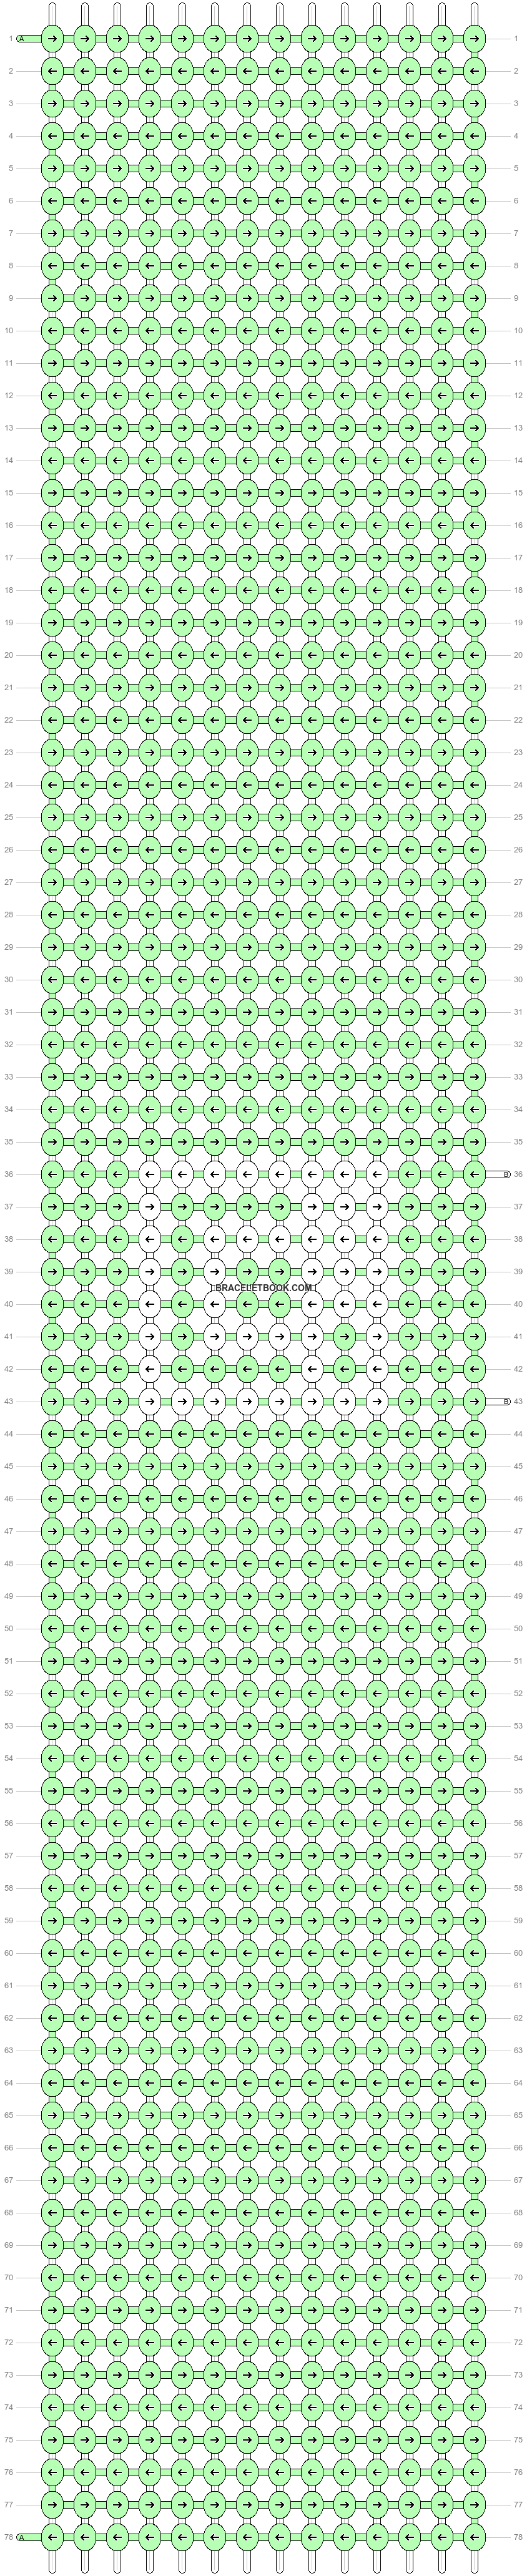 Alpha pattern #73283 variation #135444 pattern